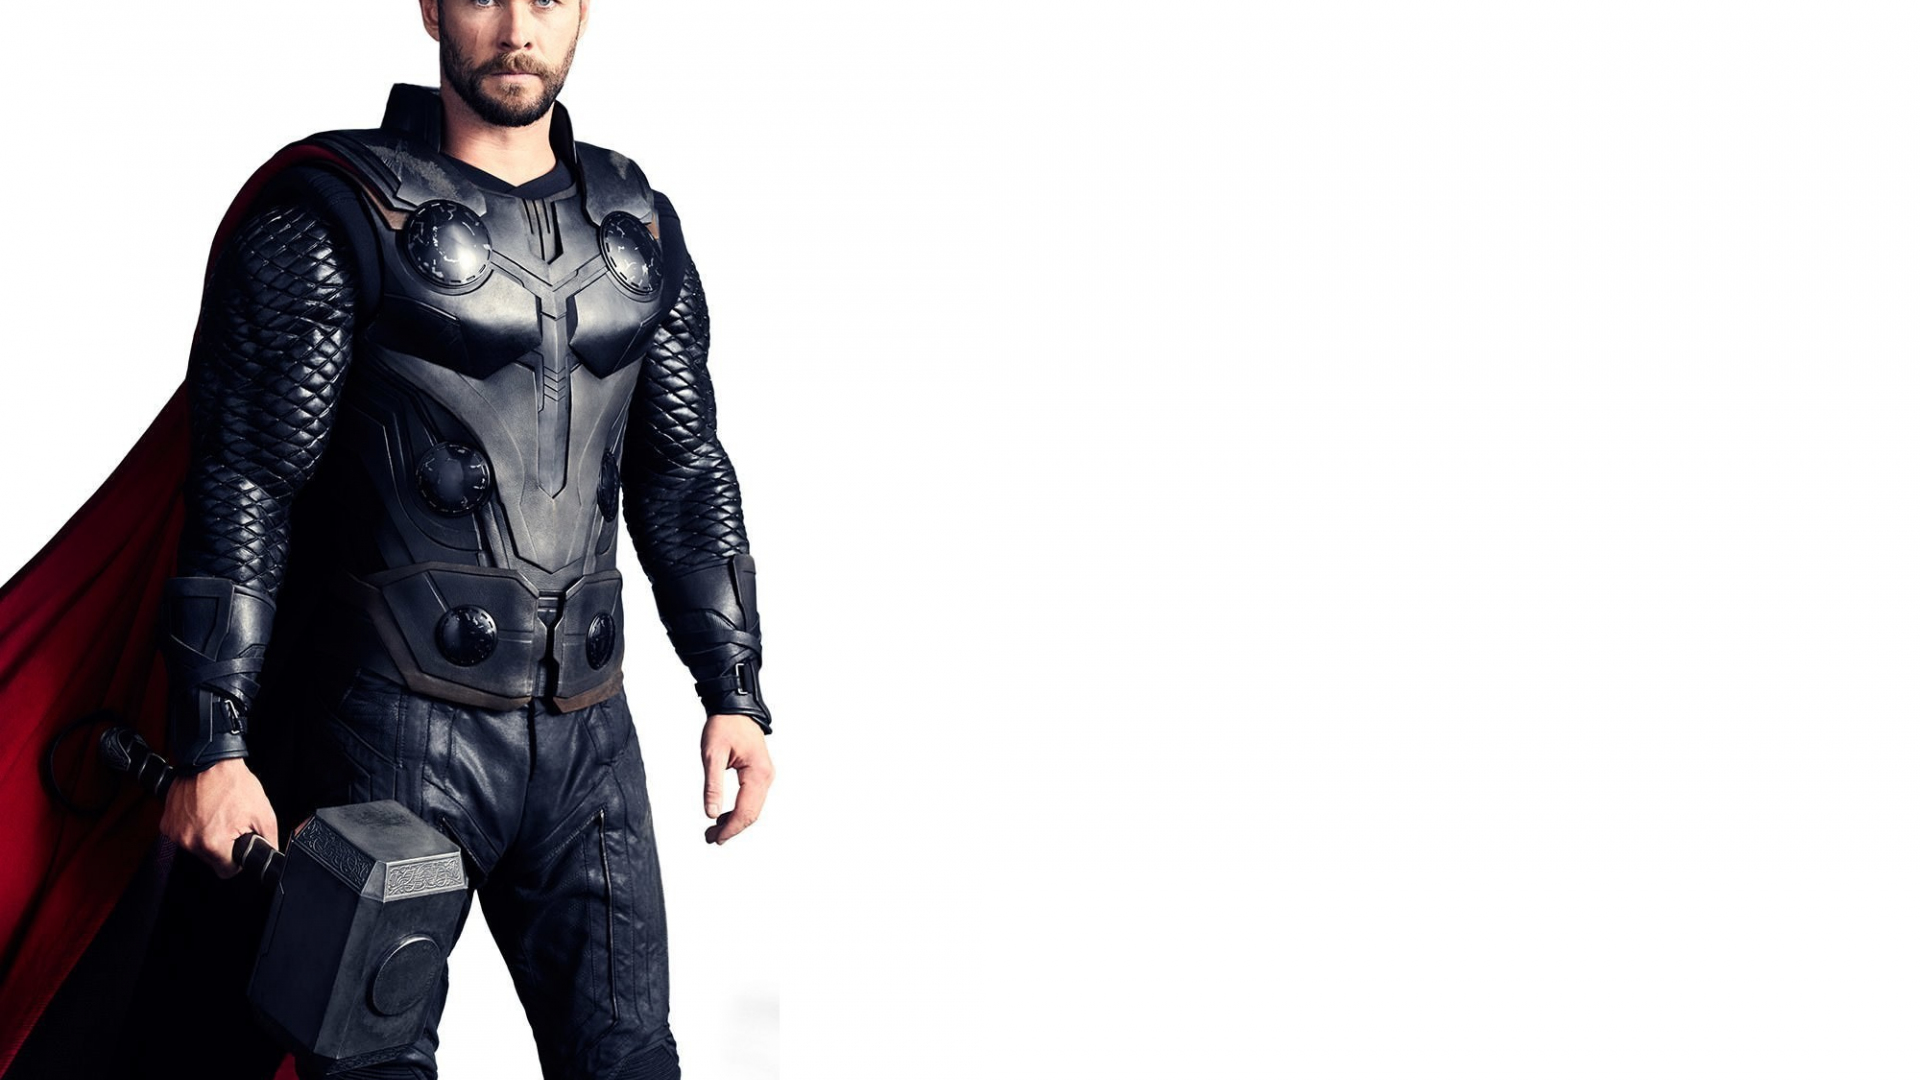 Desktop Wallpaper Avengers Infinity War Chris Hemsworth Movie Actor Thor Hd Image Picture Background 5af945